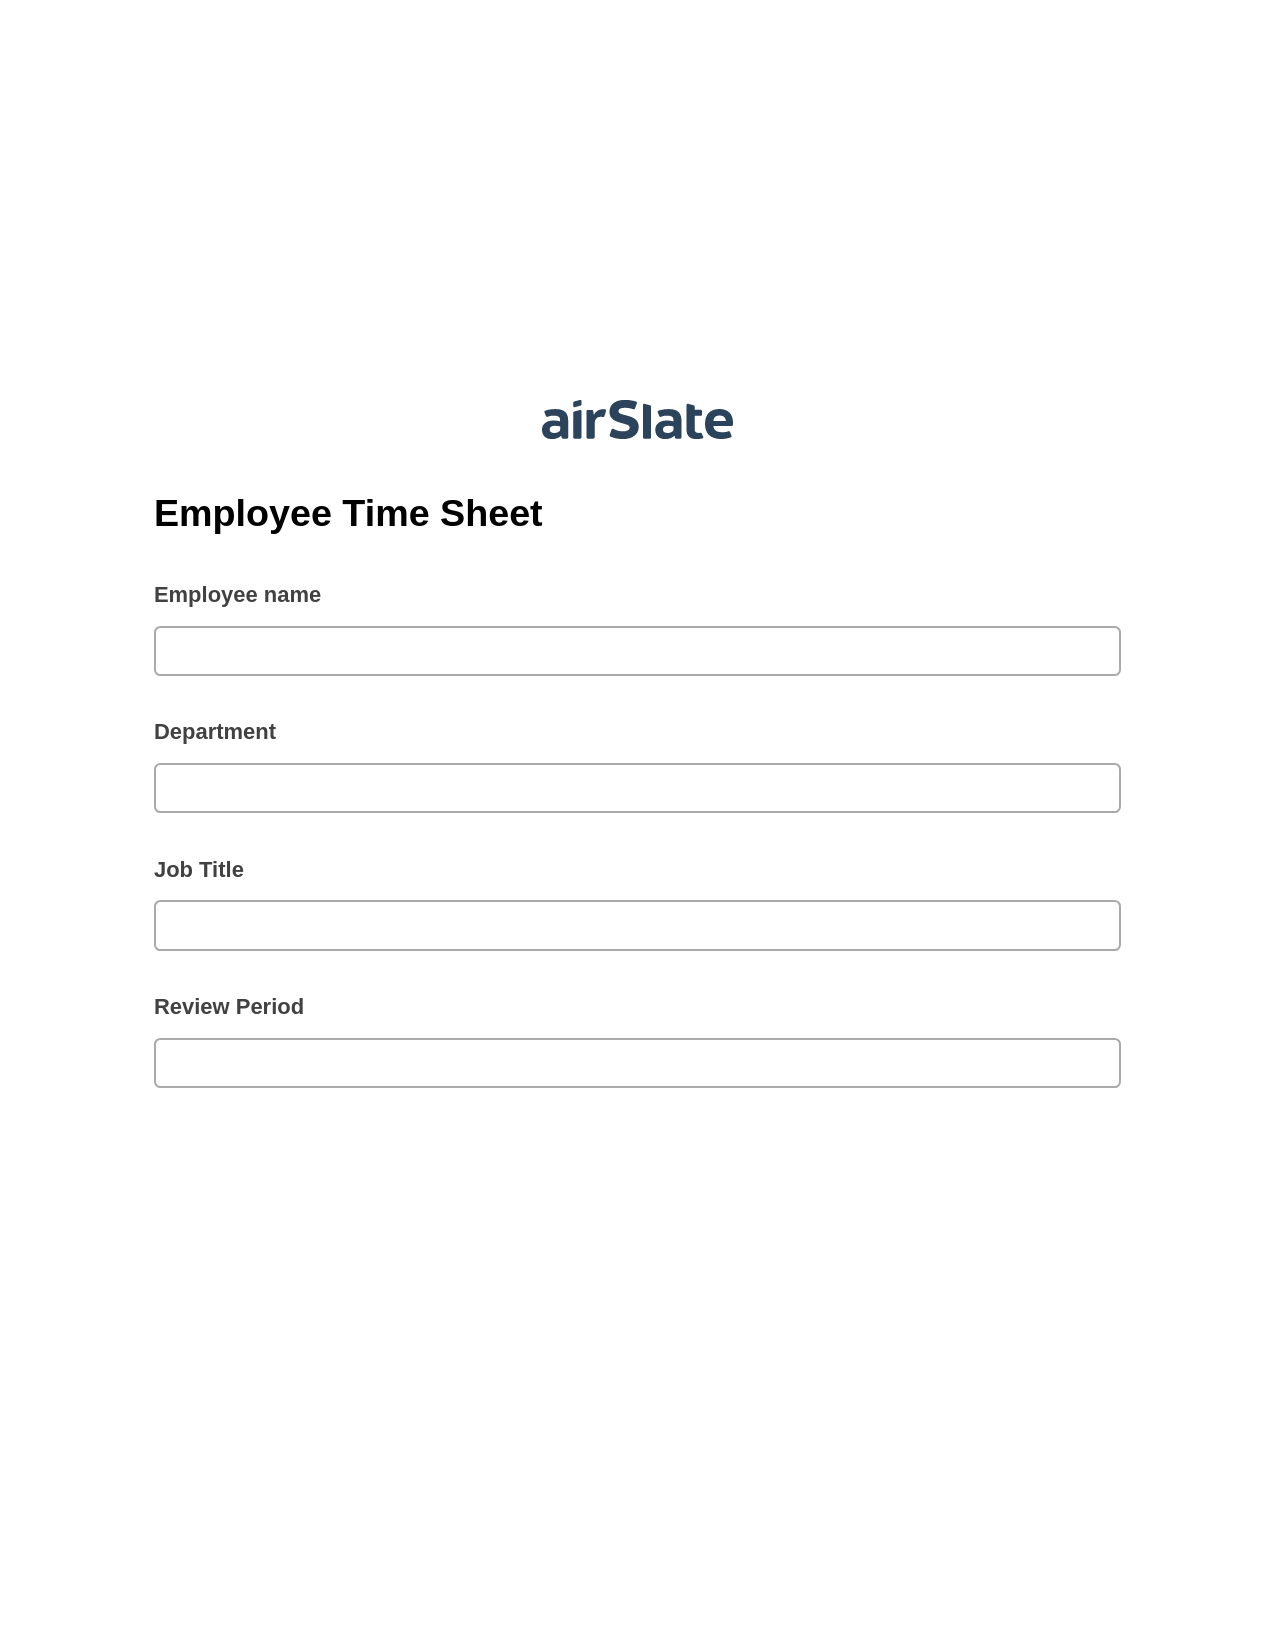 Employee Time Sheet Pre-fill Dropdowns from Google Sheet Bot, Create slate addon, Archive to Dropbox Bot